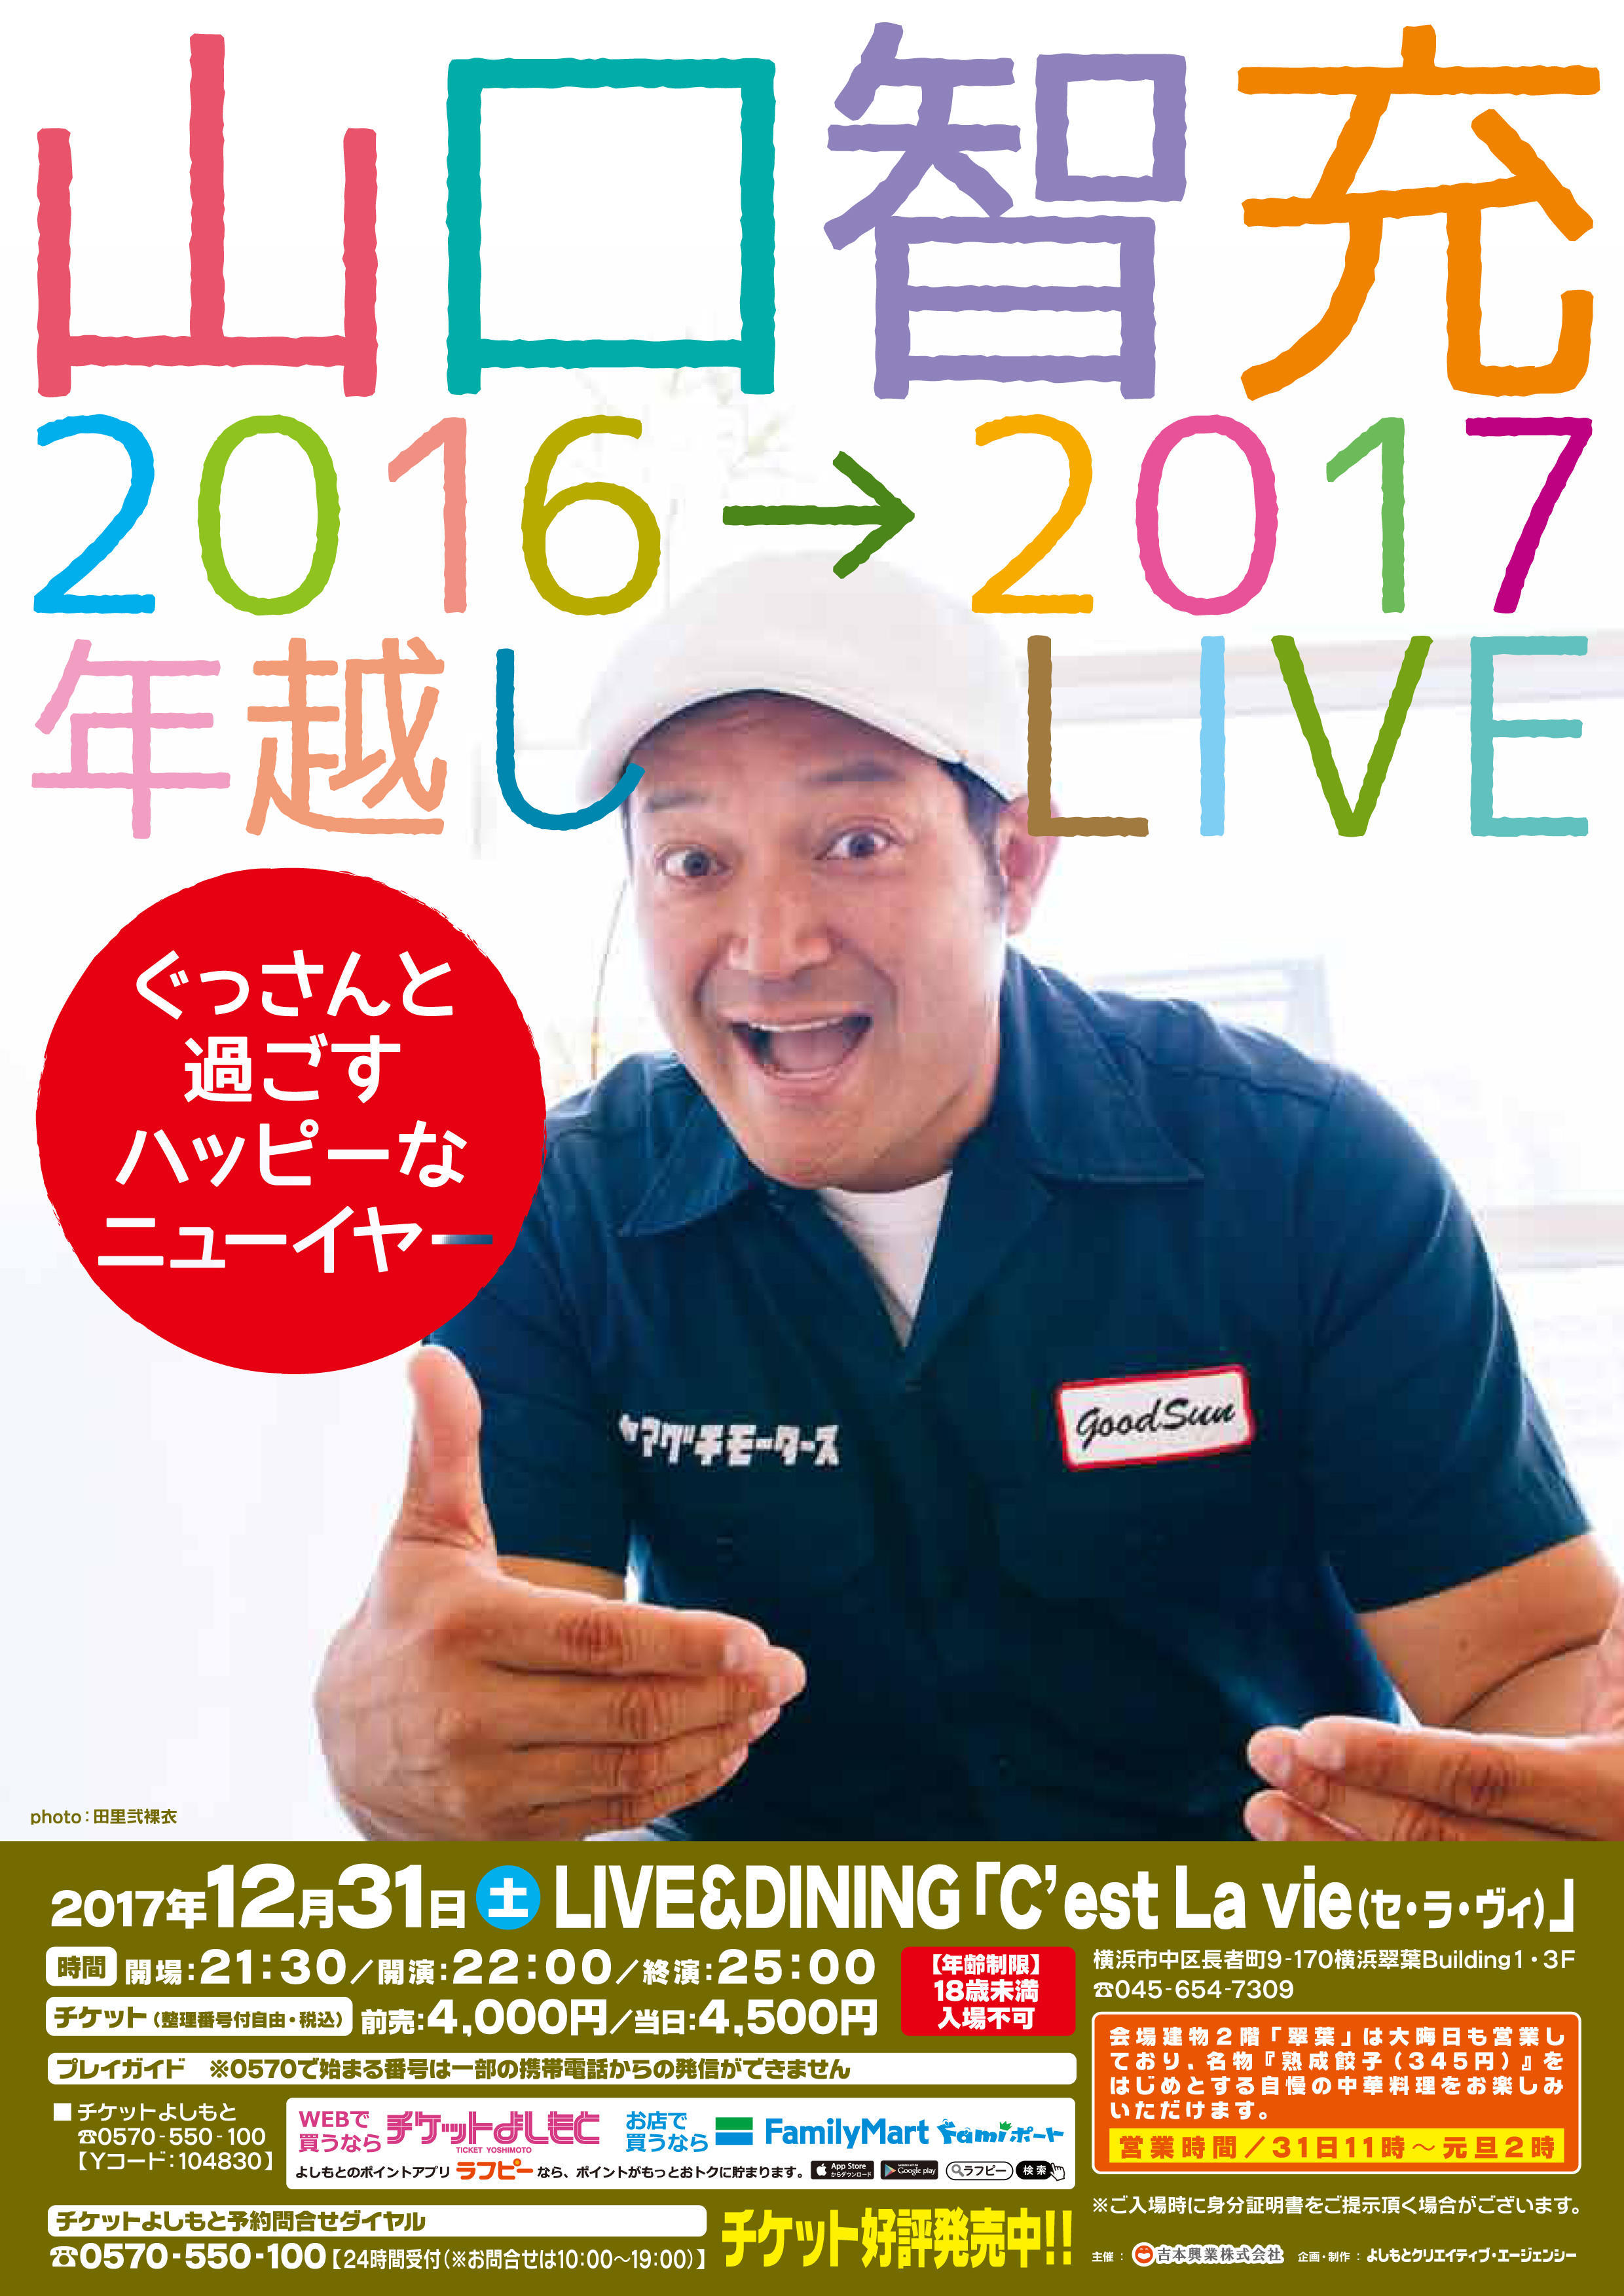 http://news.yoshimoto.co.jp/20161206175653-014bfd10ea8c13fde31a652443aef999fb8125a8.jpg